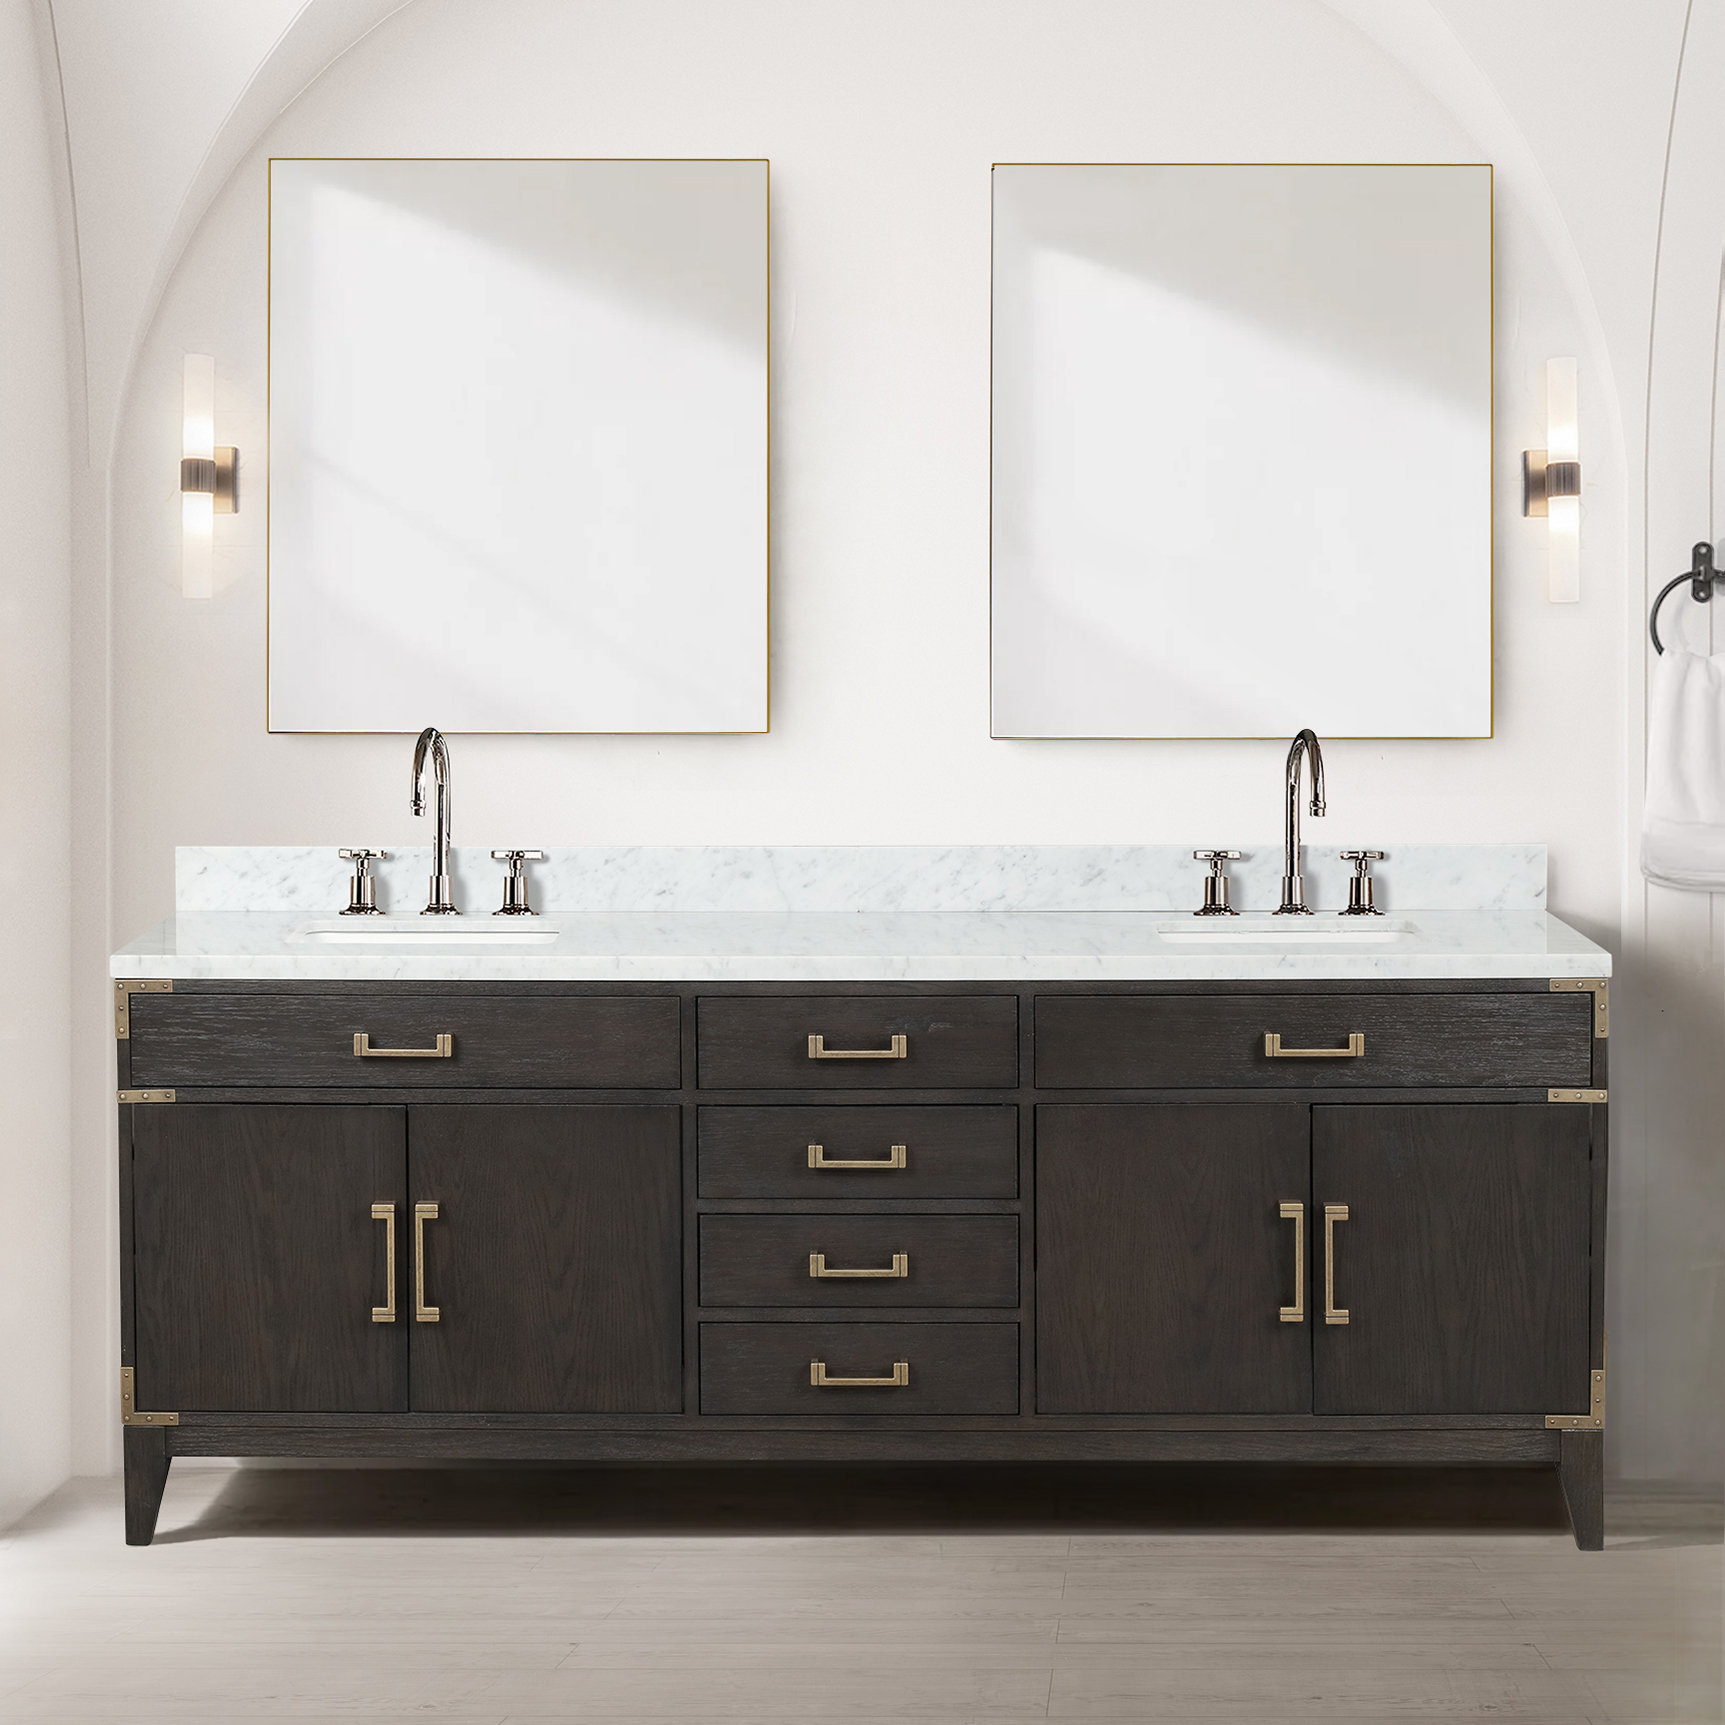 Beckett 84 Double Bathroom Vanity - Dark Blue  Beautiful bathroom  furniture for every home - Wyndham Collection